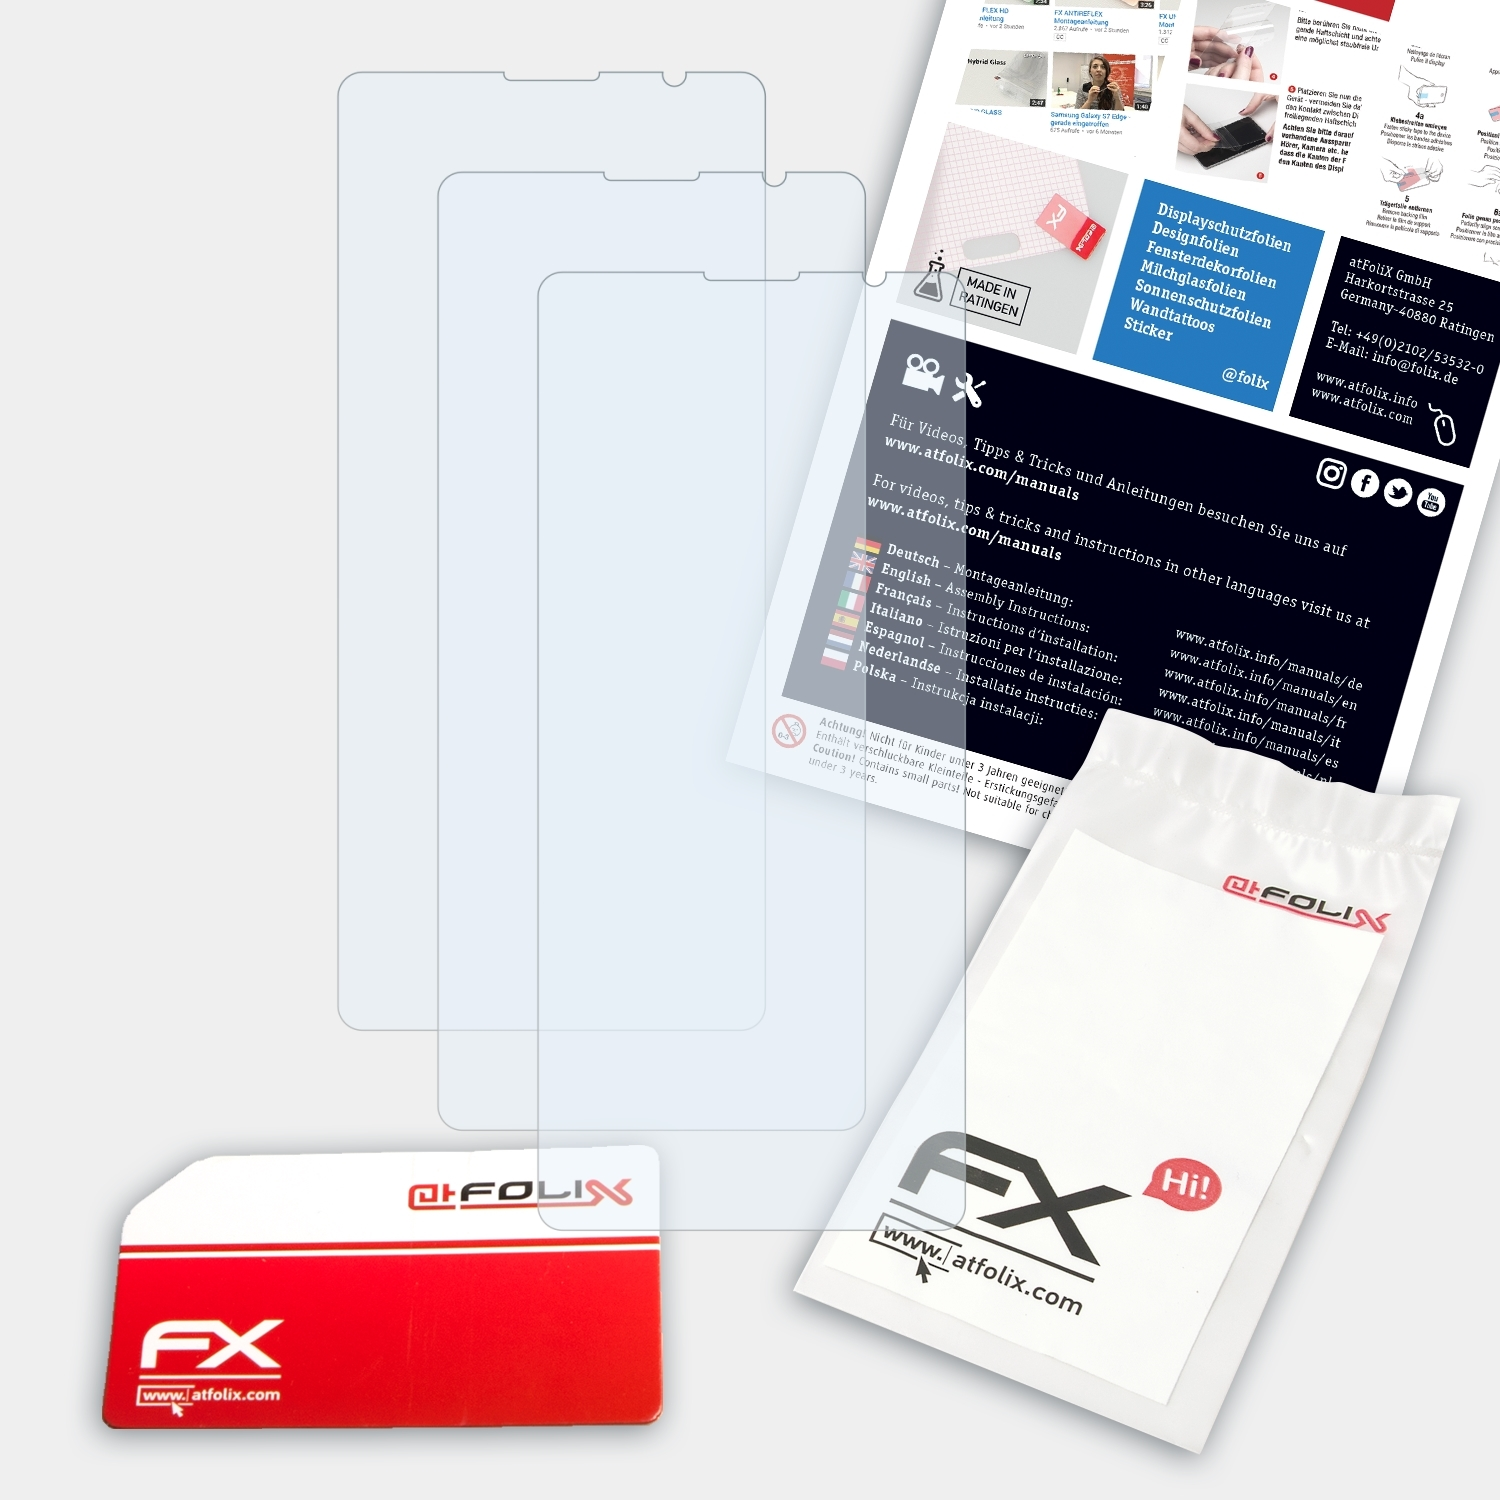 ATFOLIX 3x FX-Clear Displayschutz(für Leagoo M5 Edge)